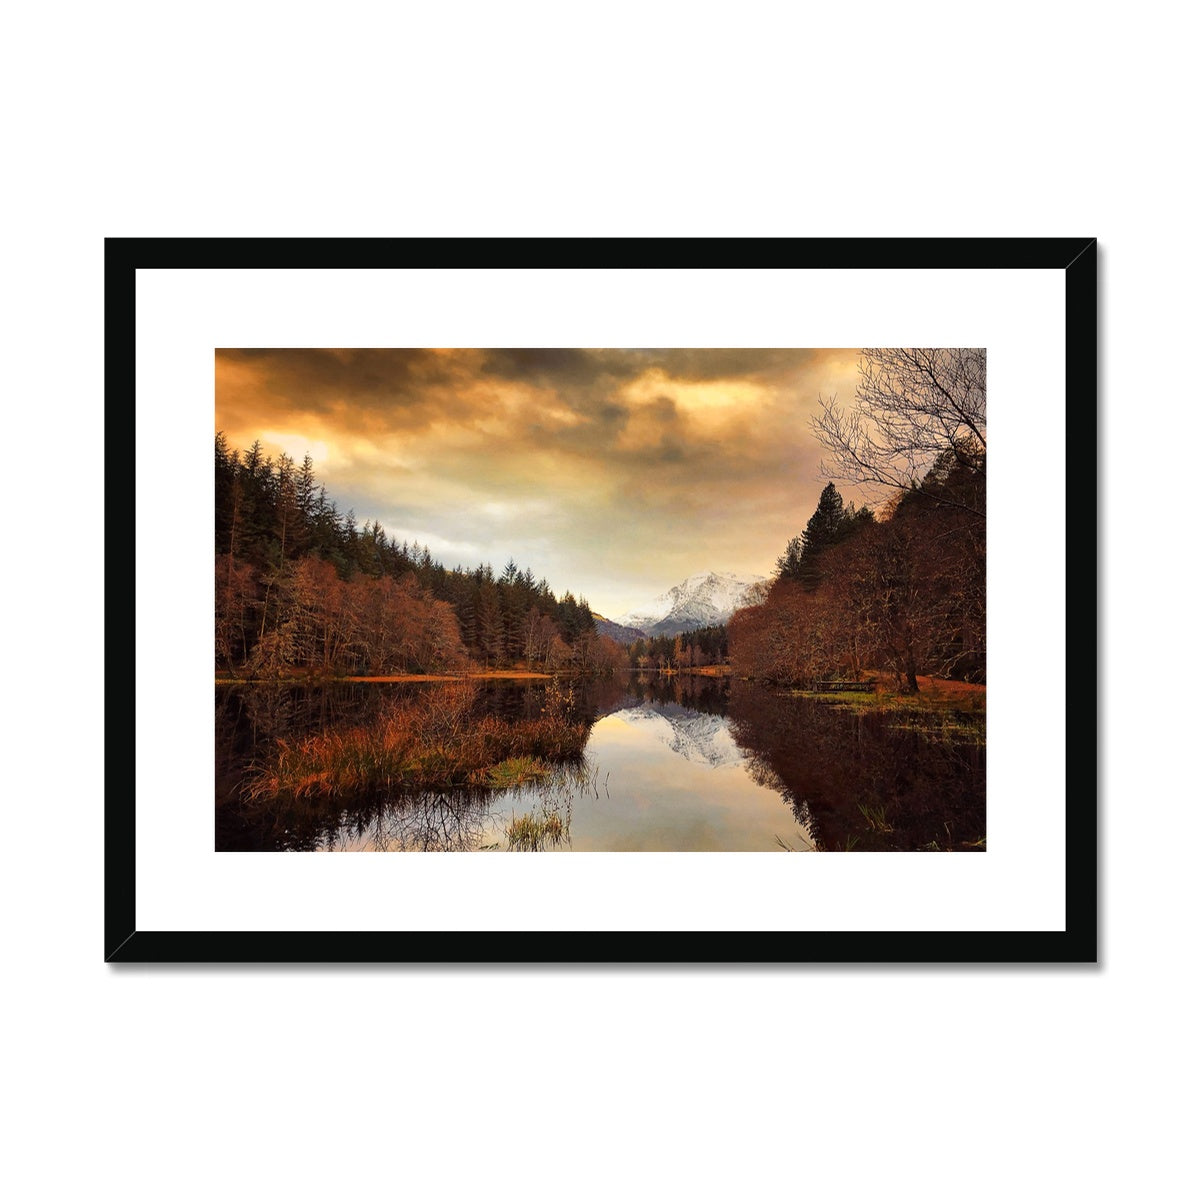 Glencoe Lochan In Autumn | Scottish Landscape Photography | Framed & Mounted Print